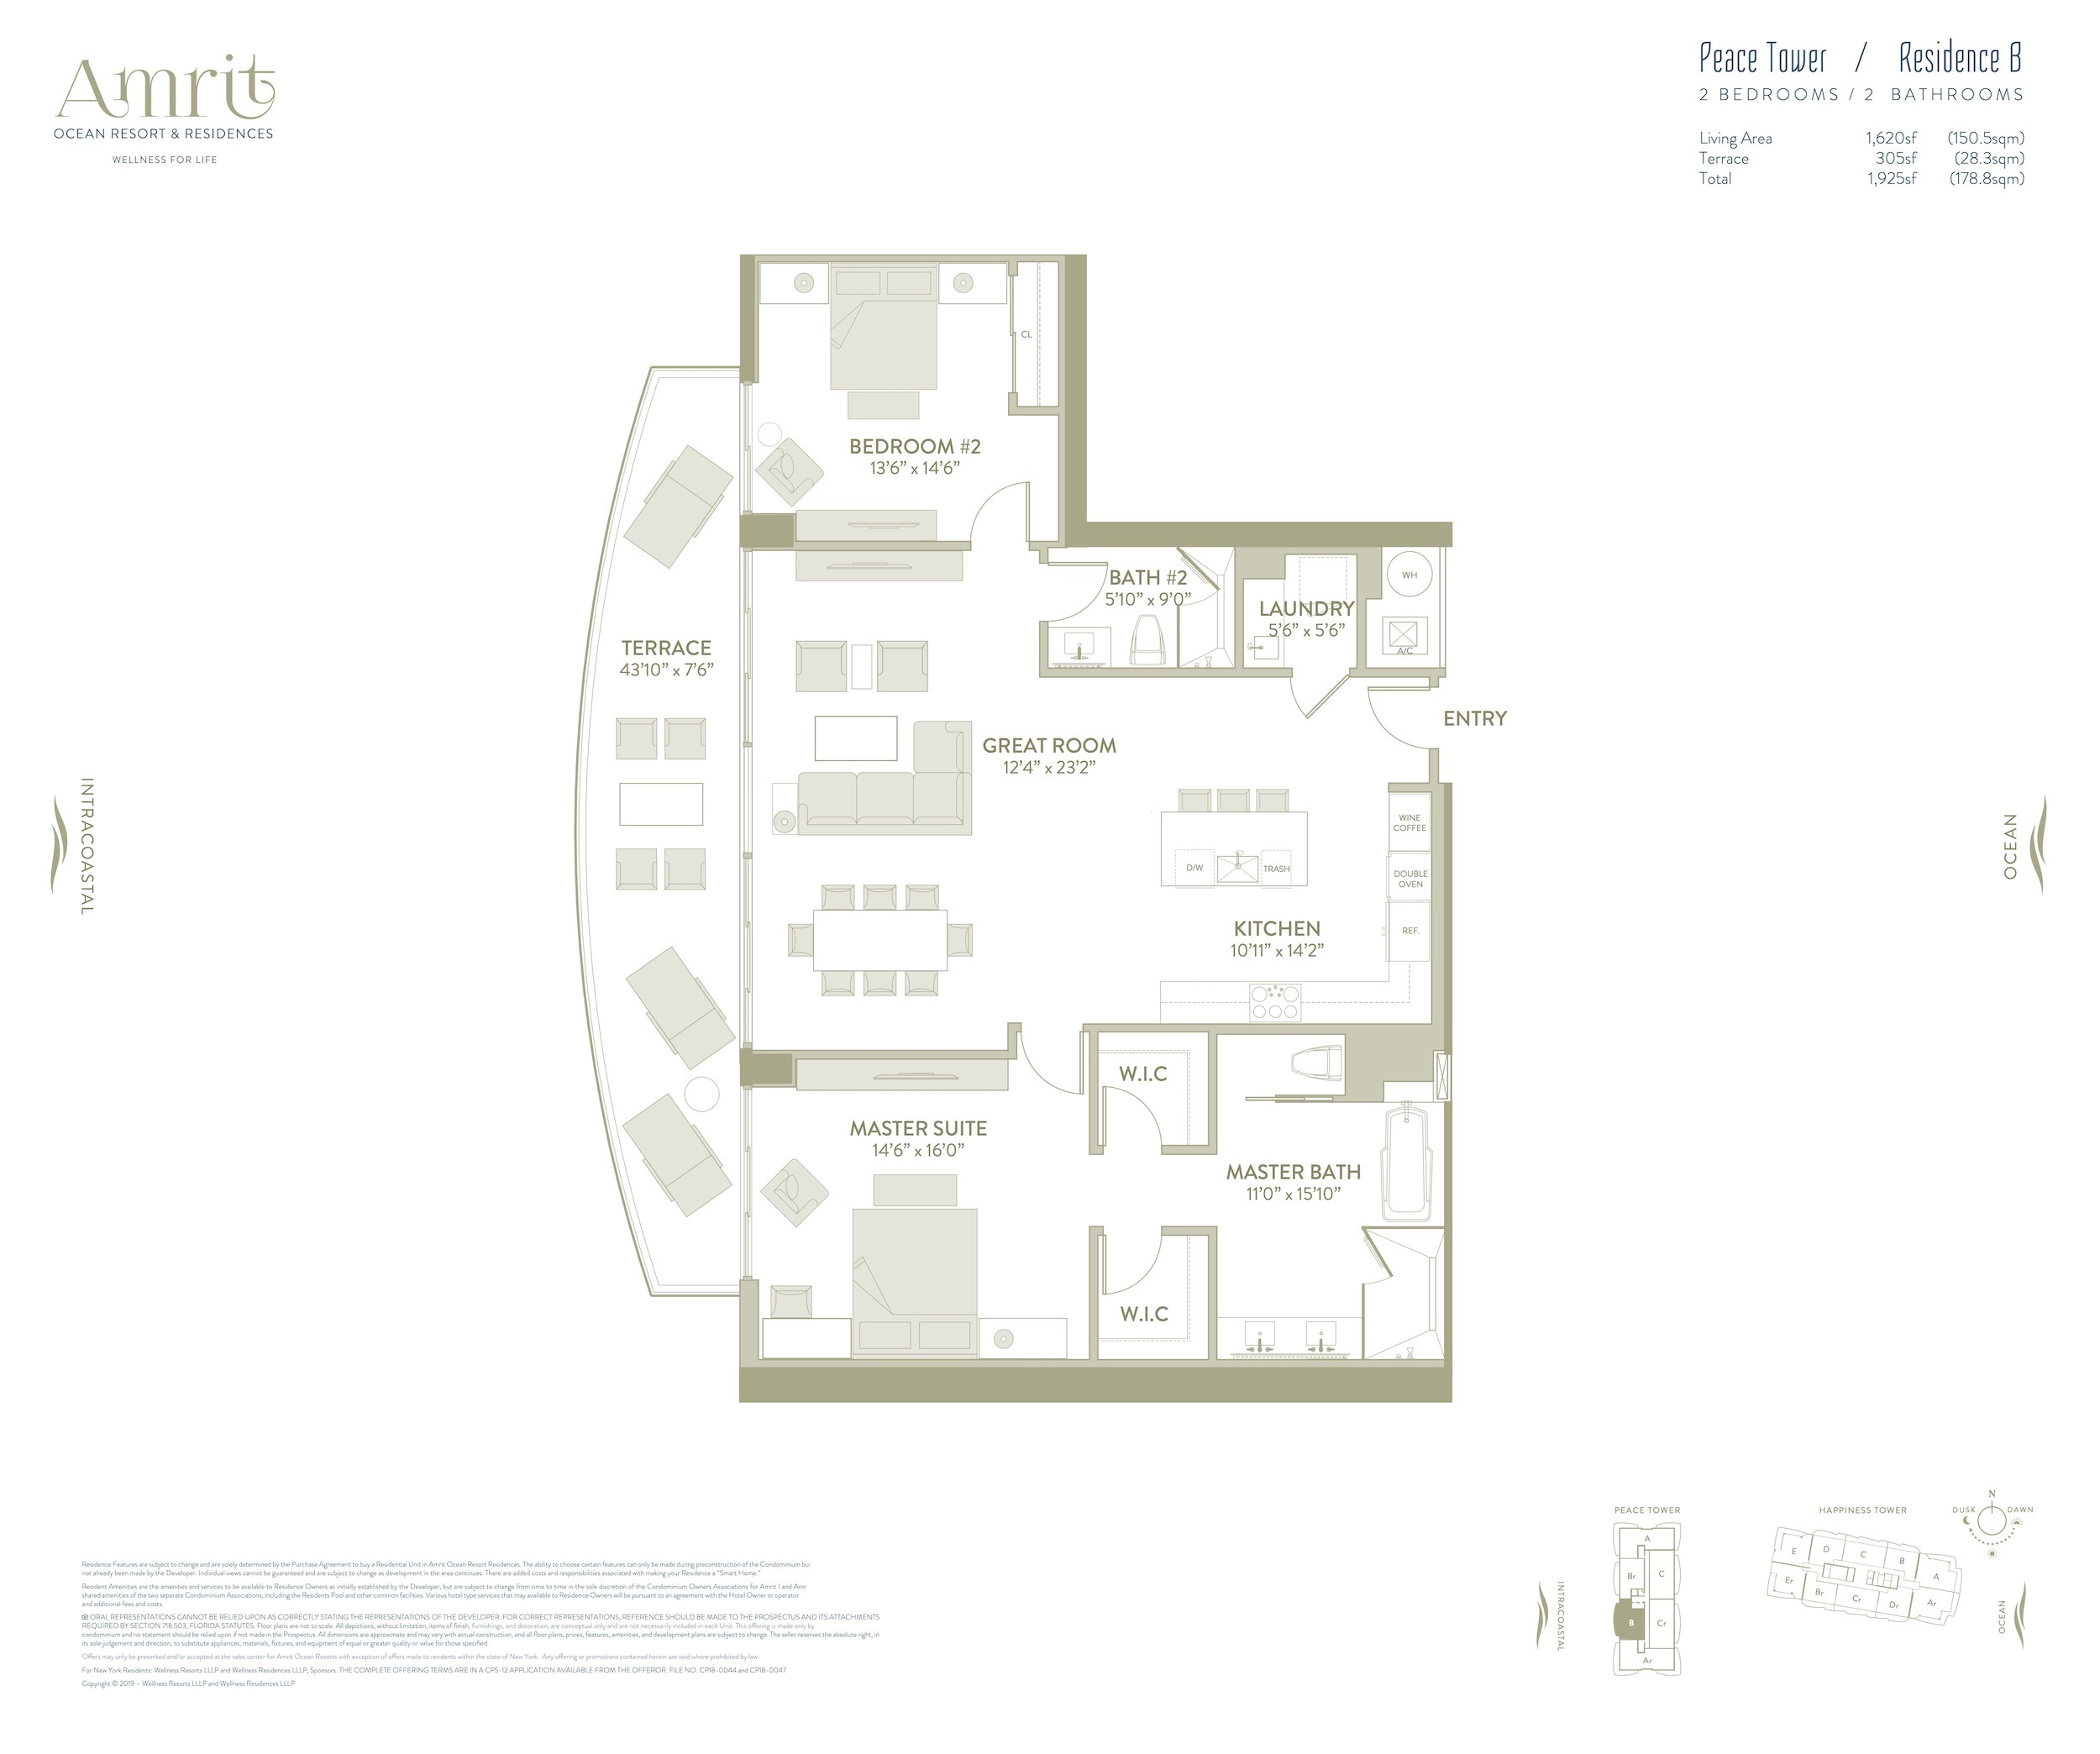 Floor Plan for Amrit Floorplans, Peace Tower Residence B